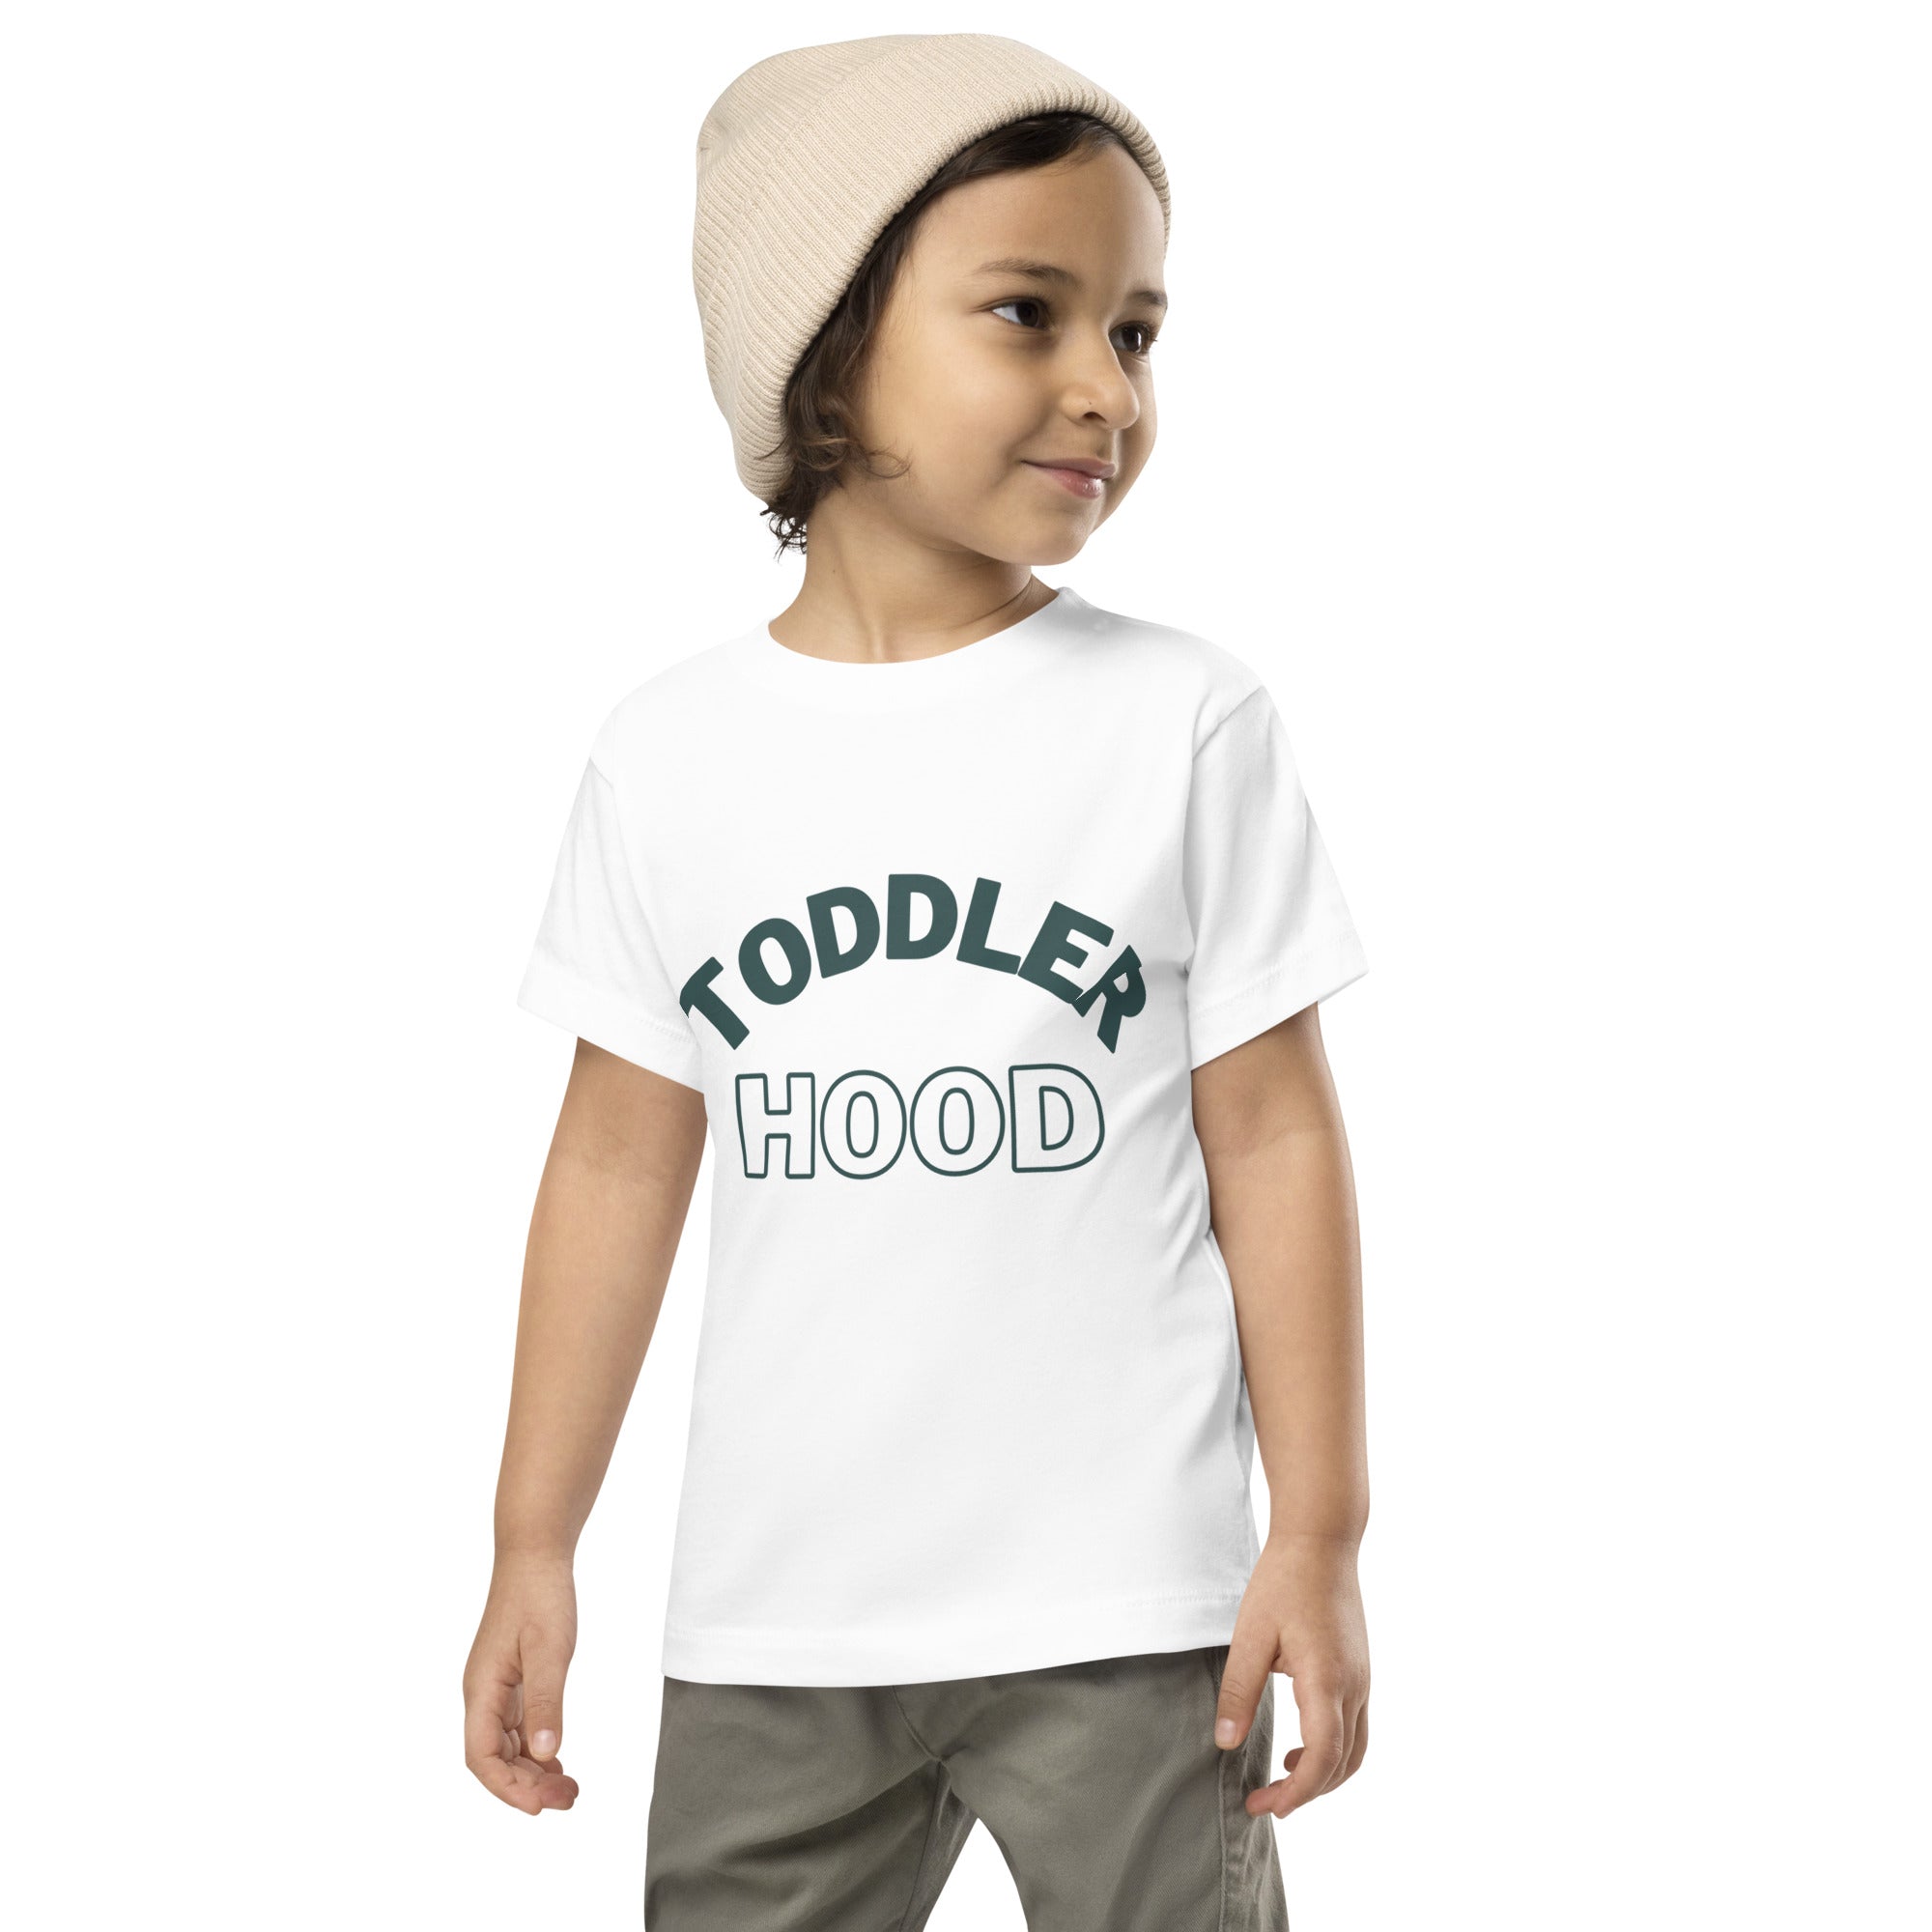 Kids shirt with toddlerhood design